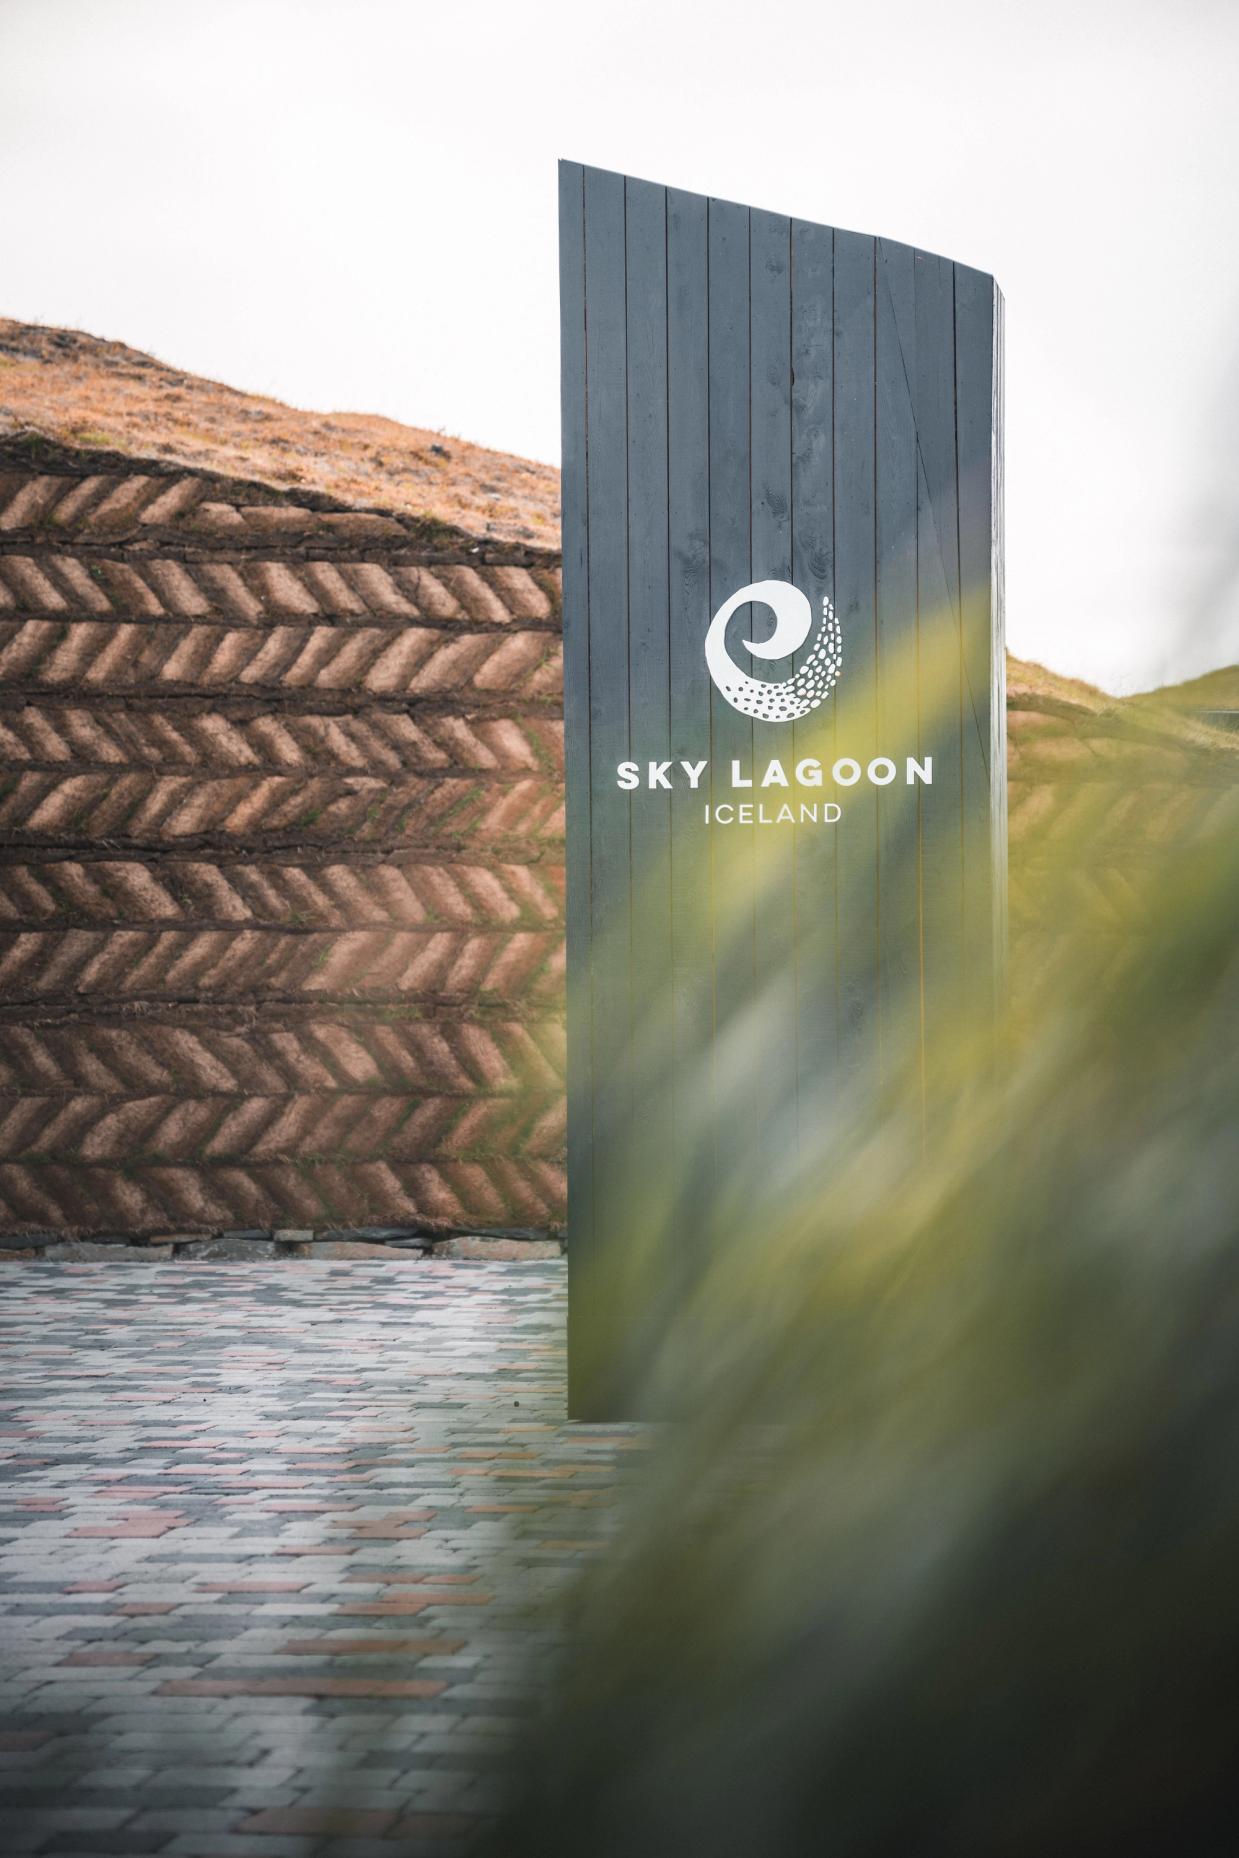 Sky lagoon in Iceland, a hot spring near Reykjavik